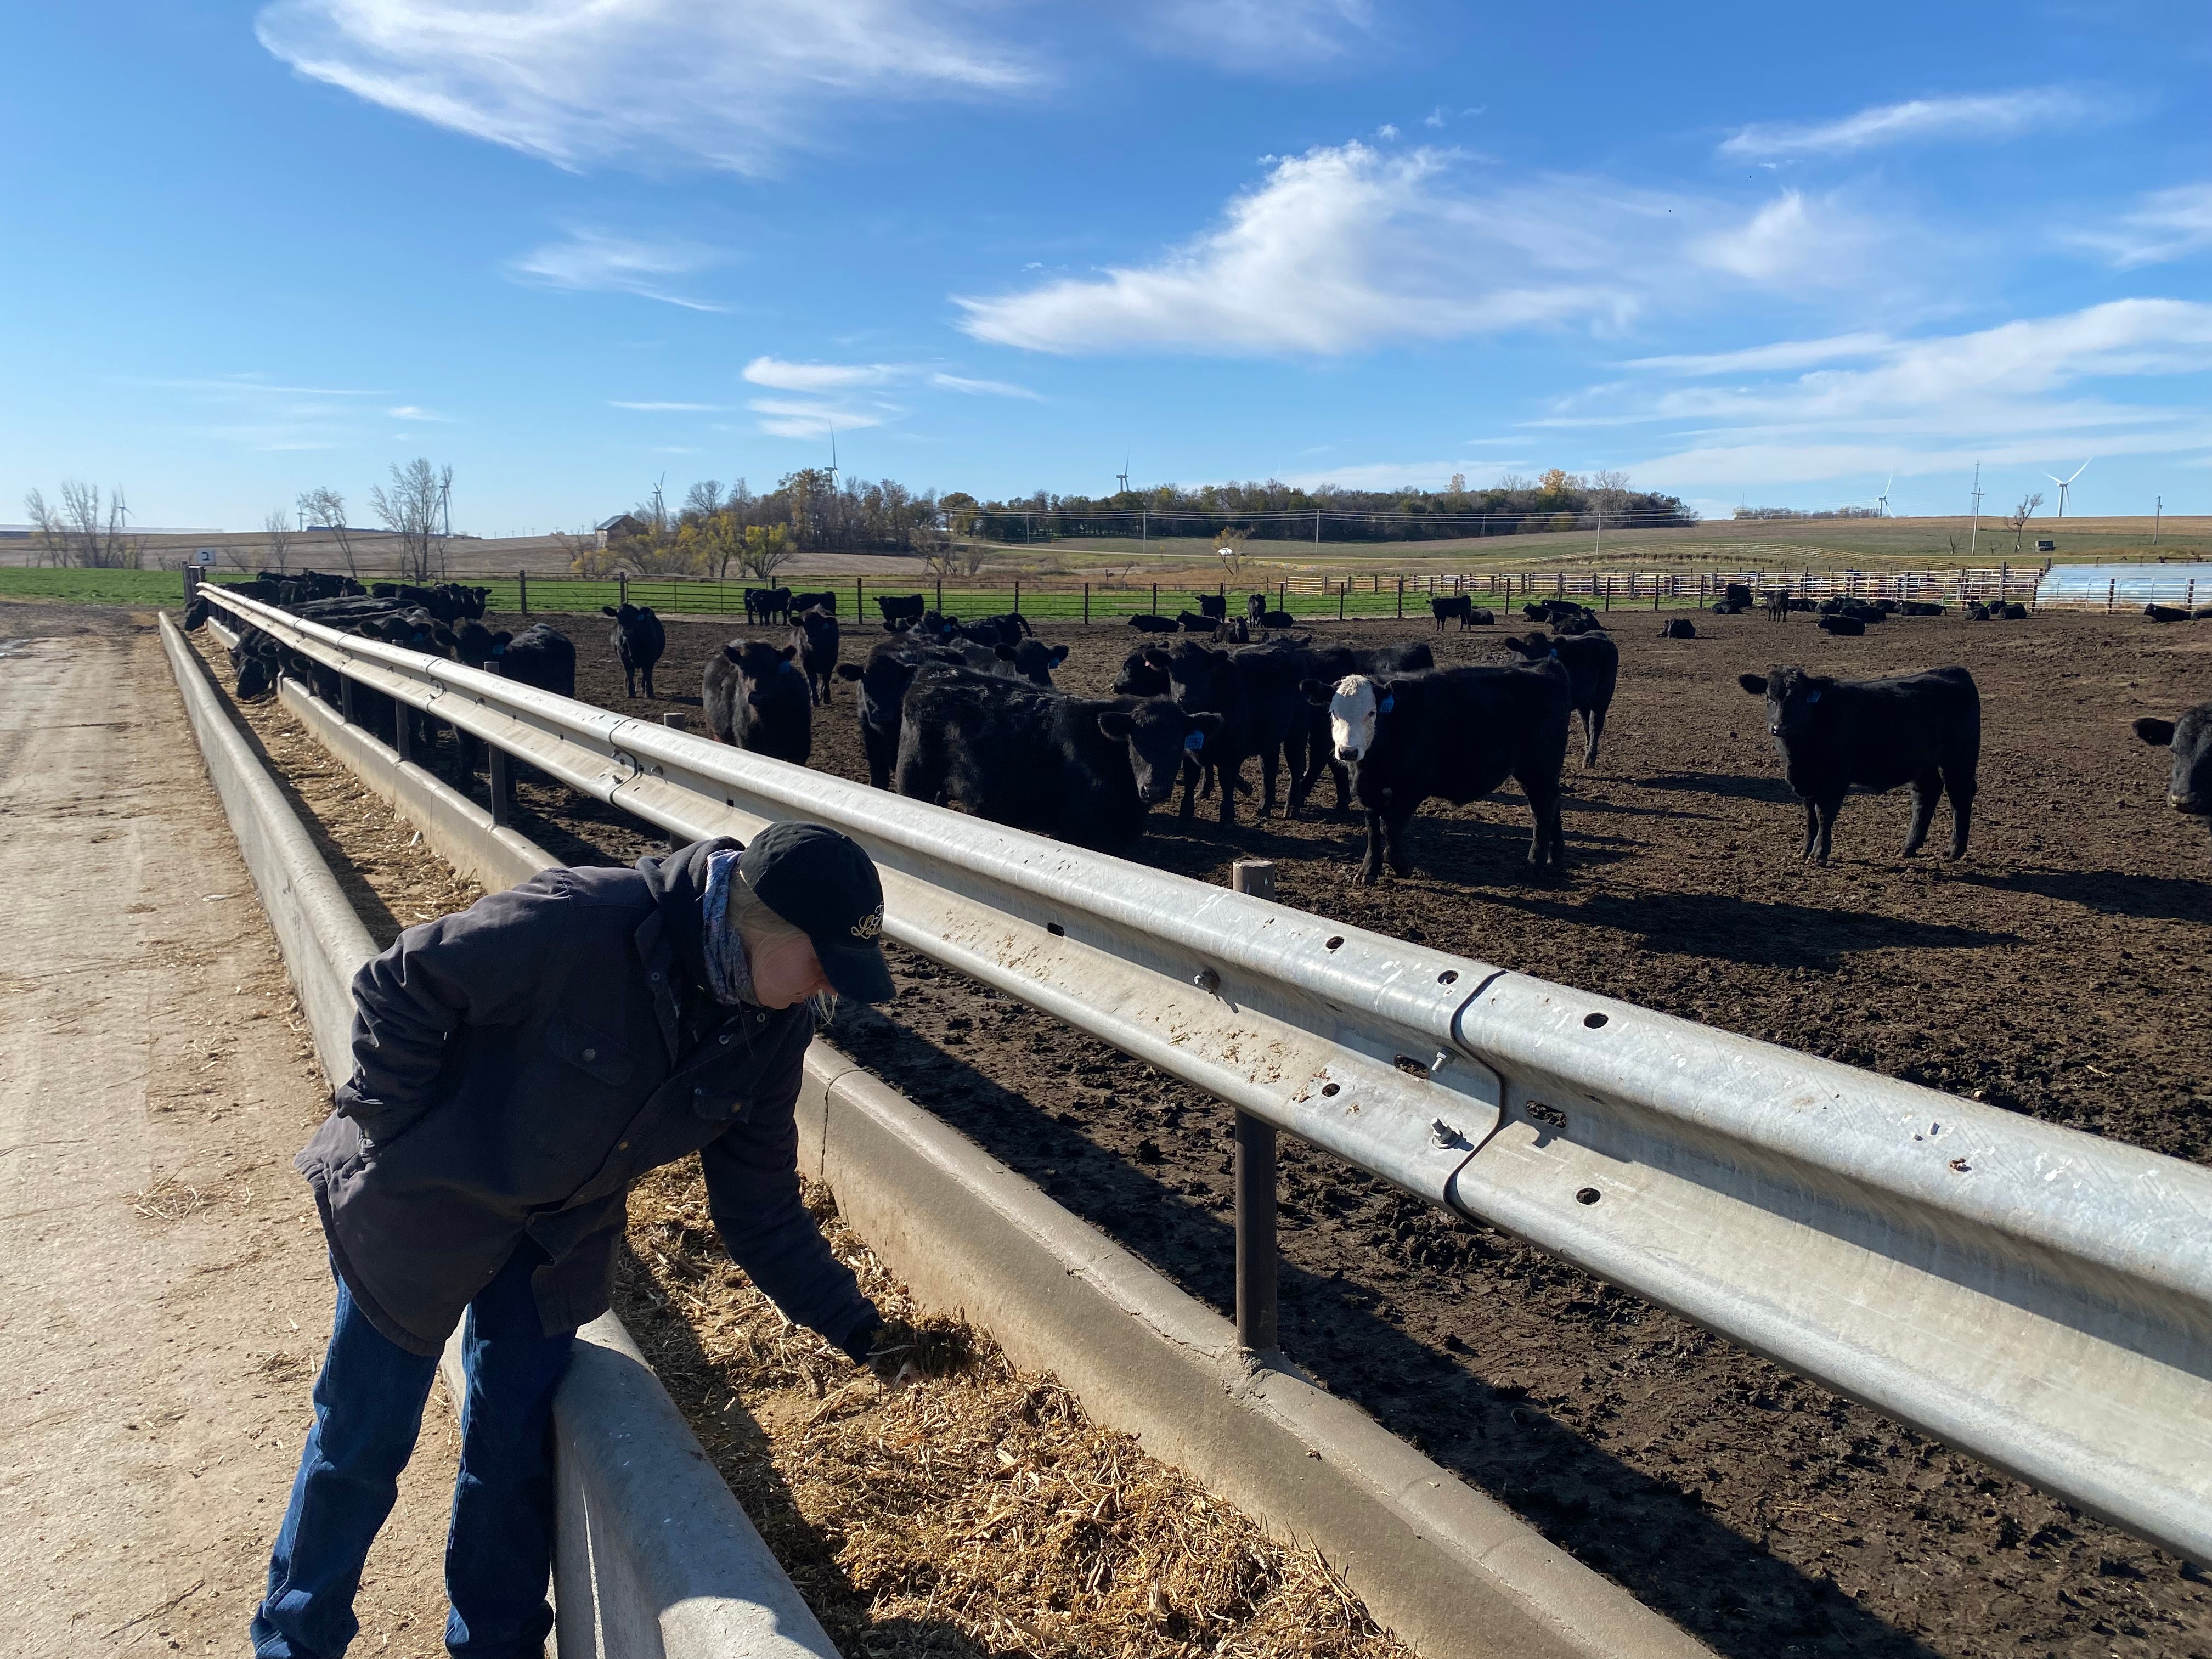 Hannah Borg, a sixth-generation cattle farmer, inspects cattle feed on her farm in northern Nebraska